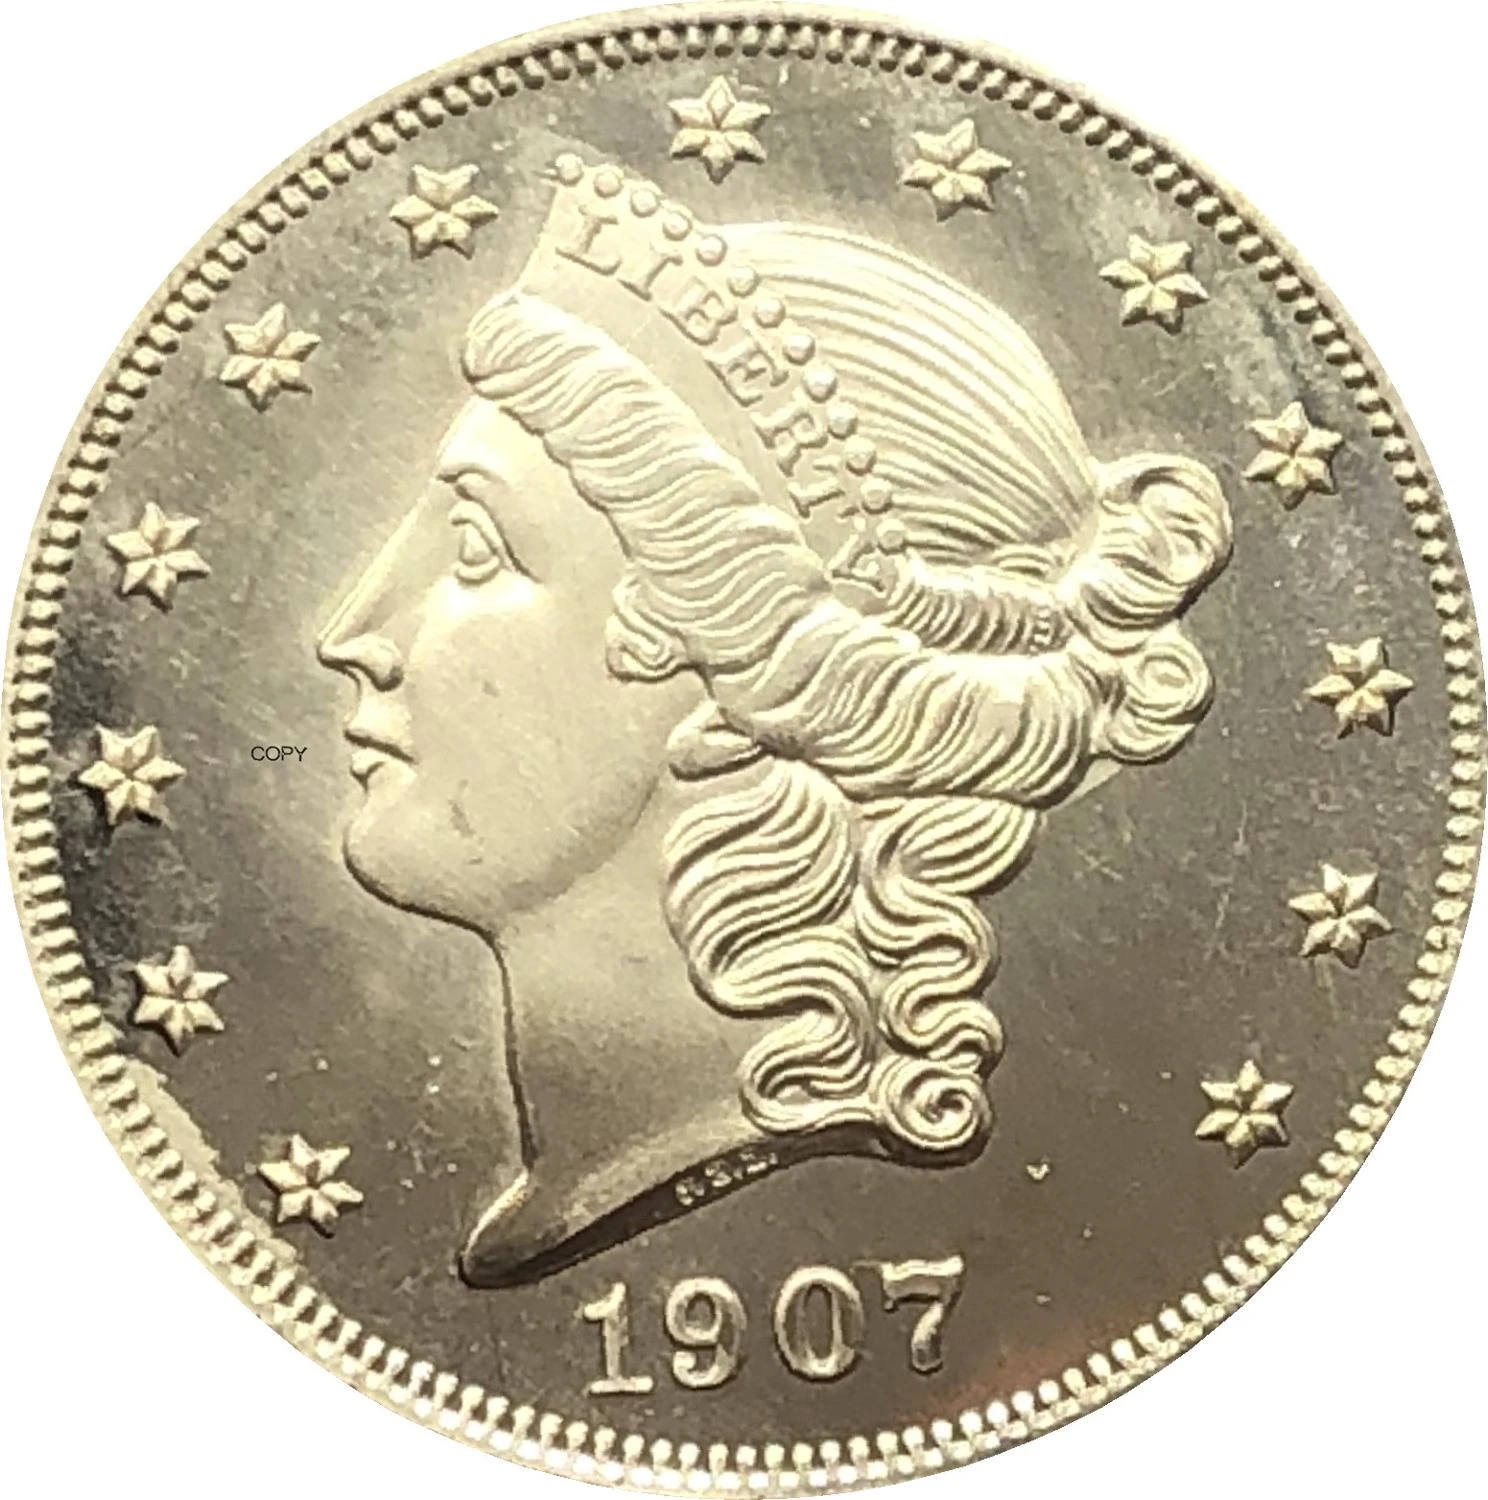 Liberty Head doble águila de los Estados Unidos, 1907, 1907 D, 1907 S, 20  dólares, Motto In God, We Trust, monedas de oro, monedas de copia de latón| Monedas sin curso legal| - AliExpress